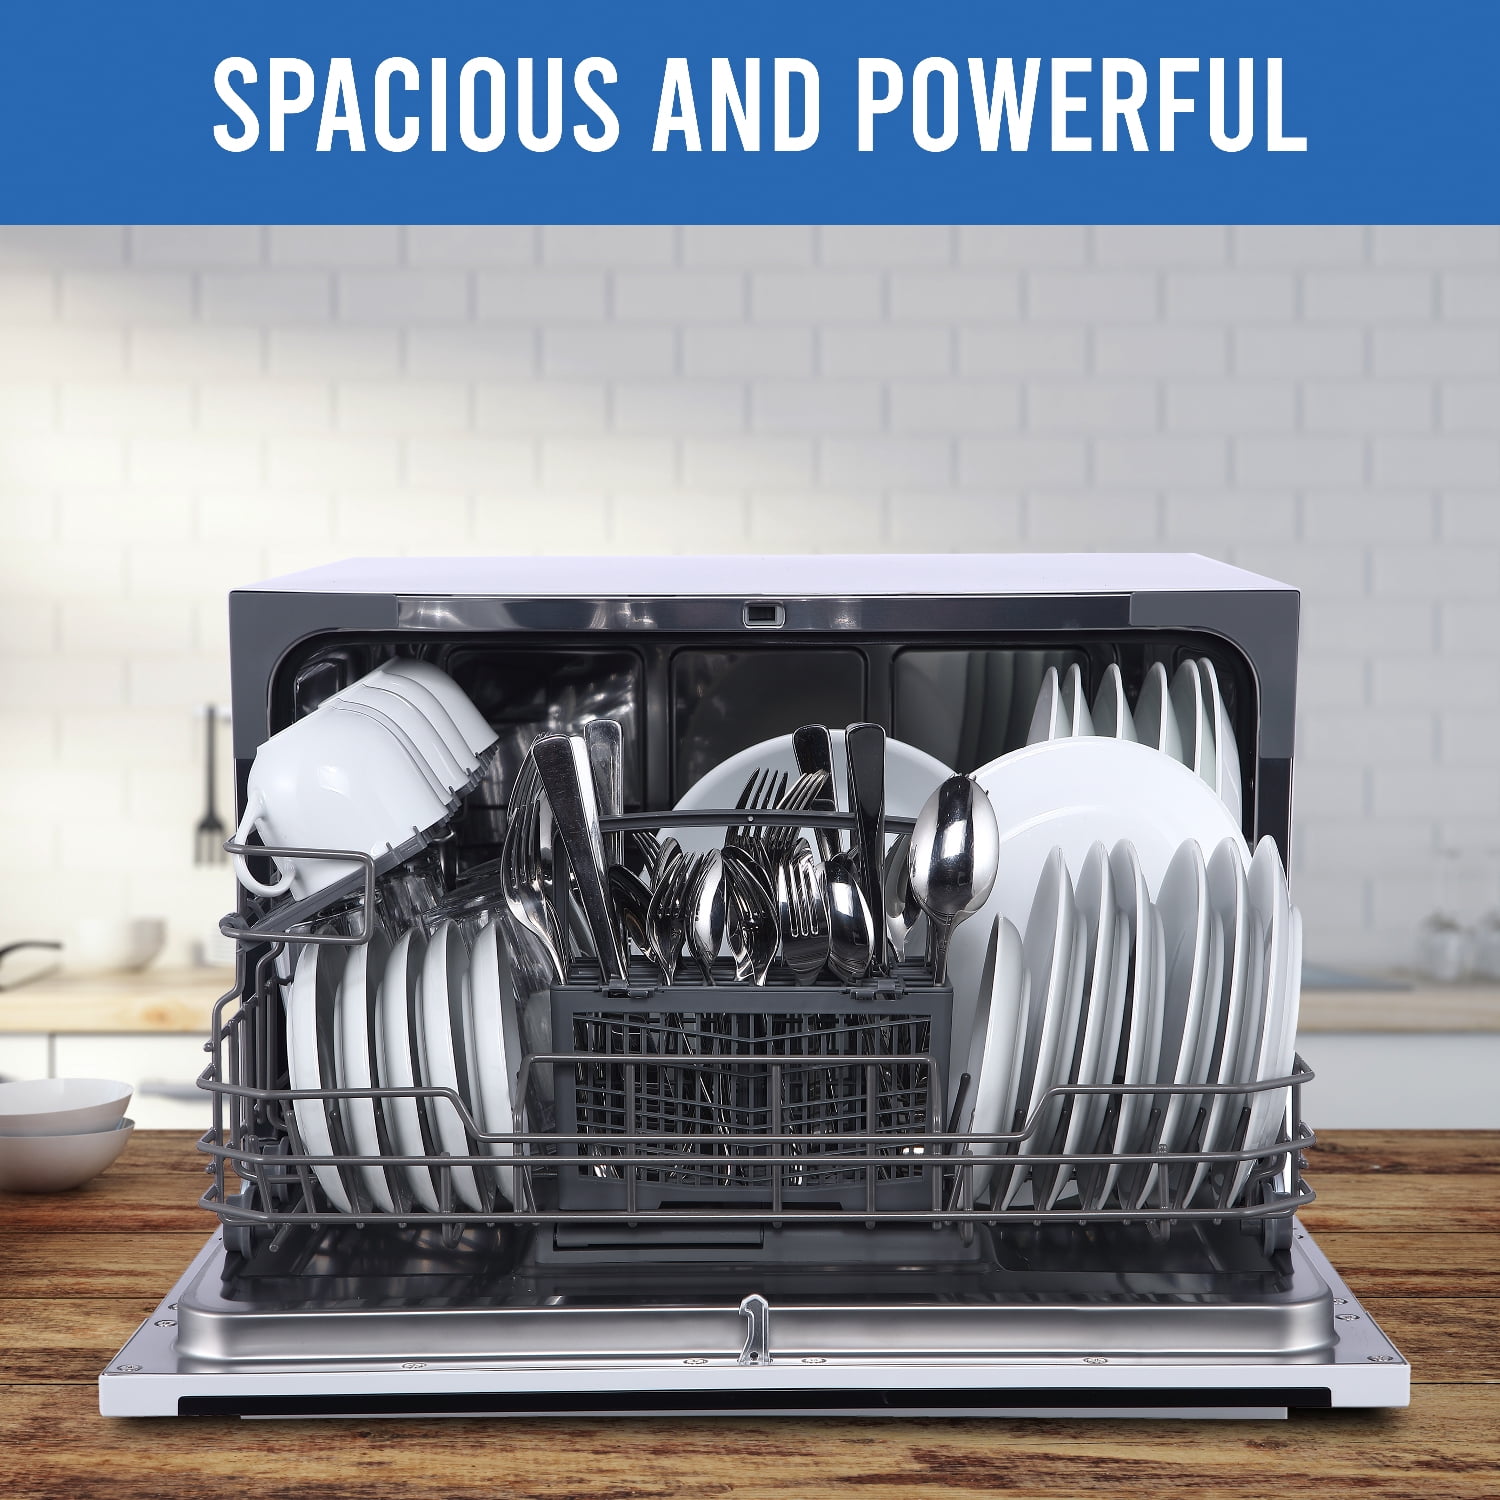 Countertop Dishwasher Karas Smart Control for Kitchen